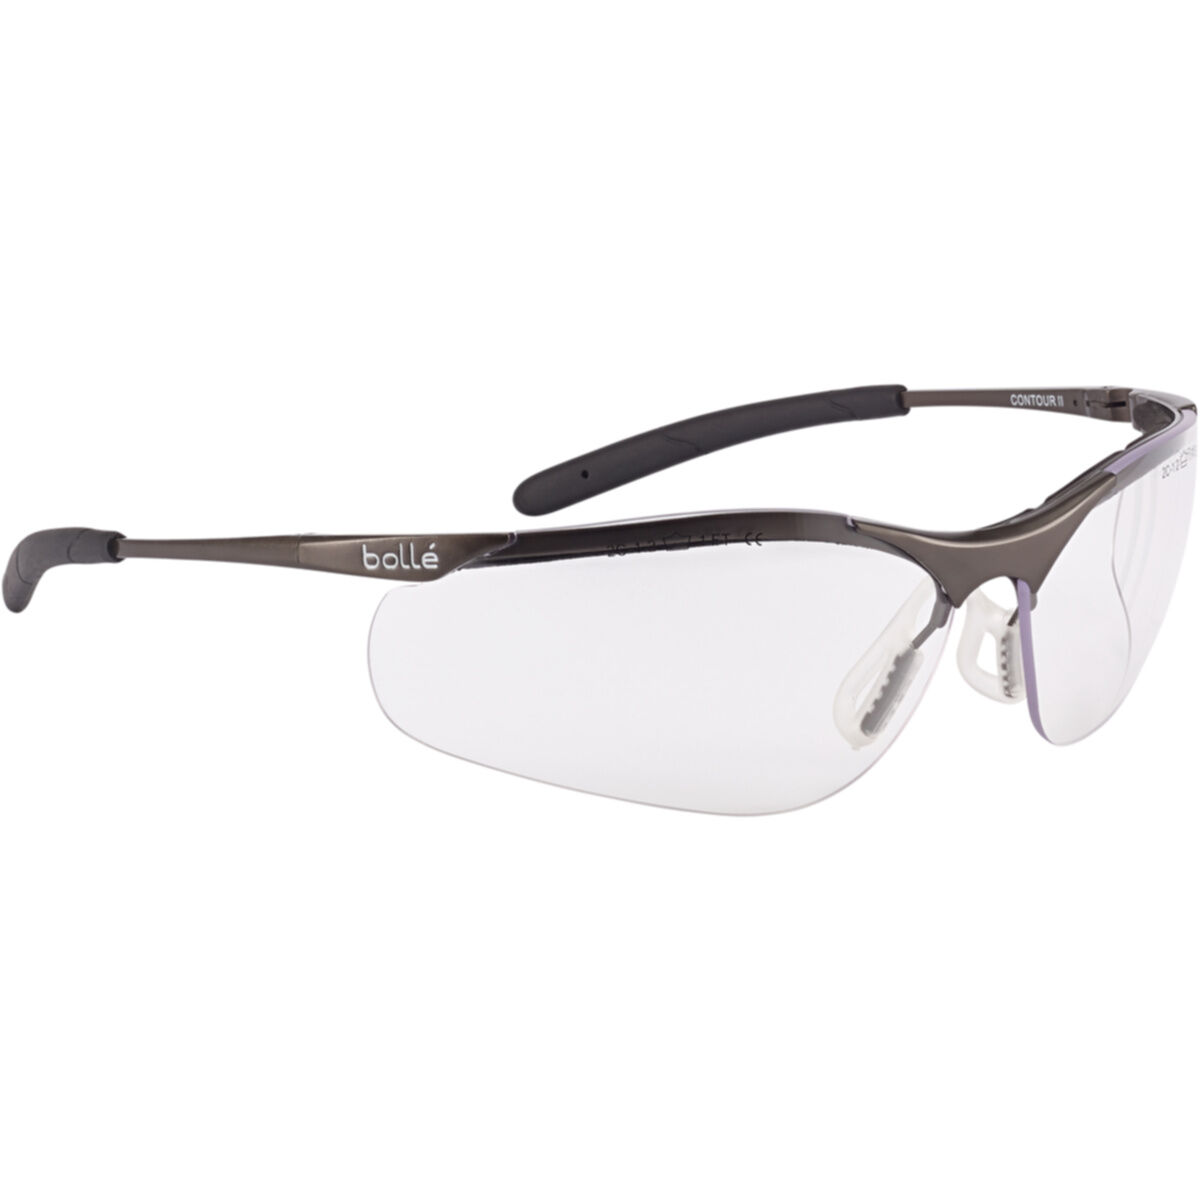 Bolle Contour Safety Glasses Gunmetal Frame Clear Anti-Fog Lens ANSI Z87 